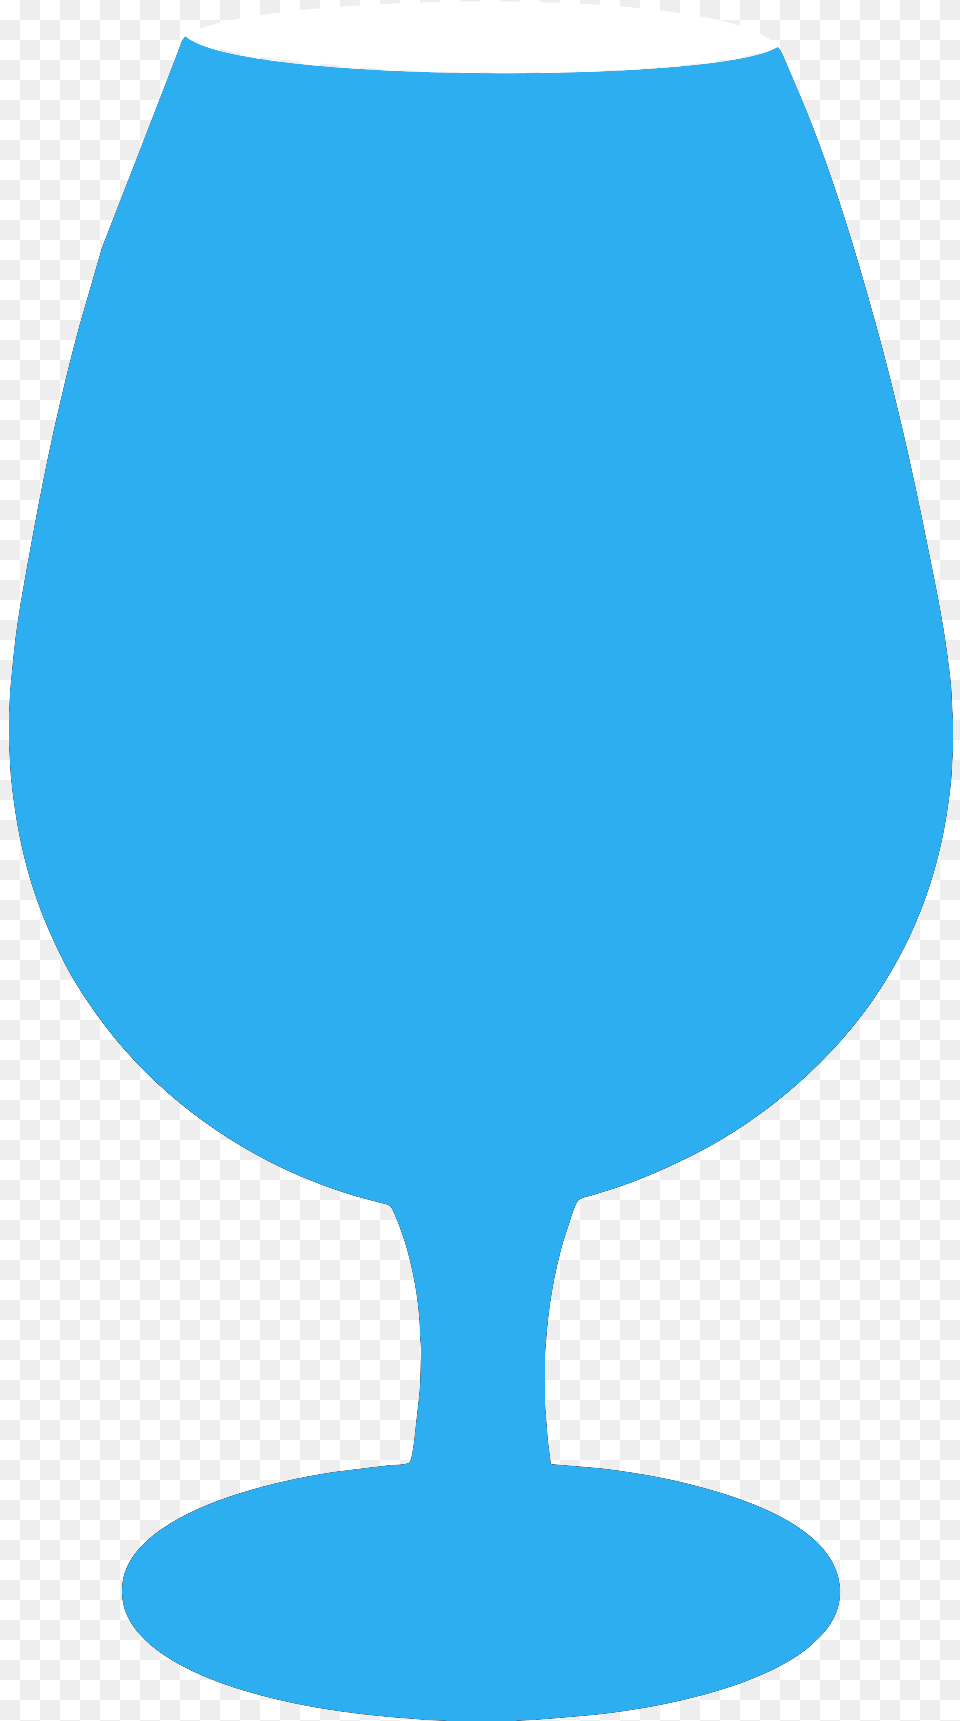 Wine Glass, Goblet, Lamp, Alcohol, Beverage Png Image